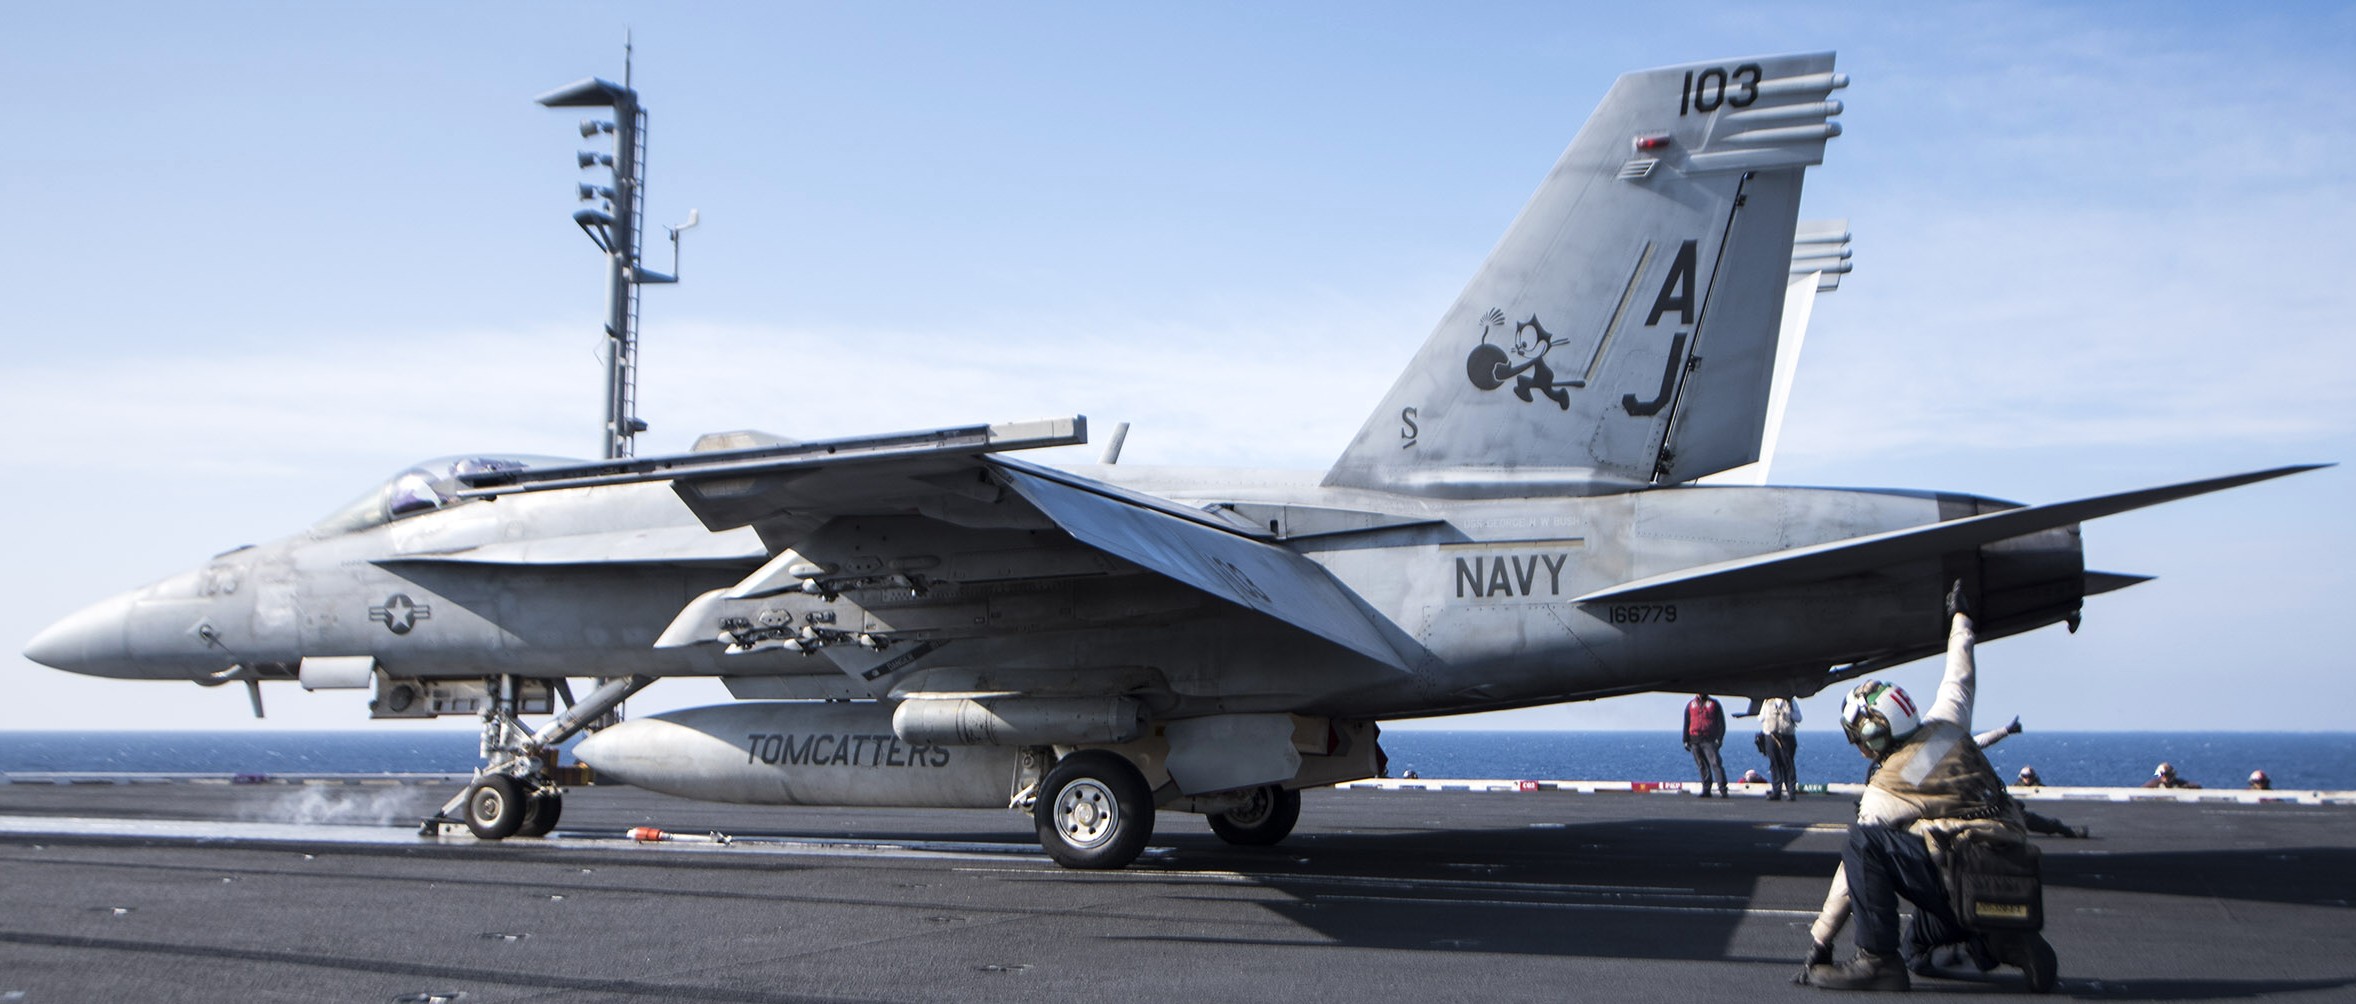 vfa-31 tomcatters strike fighter squadron f/a-18e super hornet us navy cvn-77 uss george h. w. bush cvw-8 36